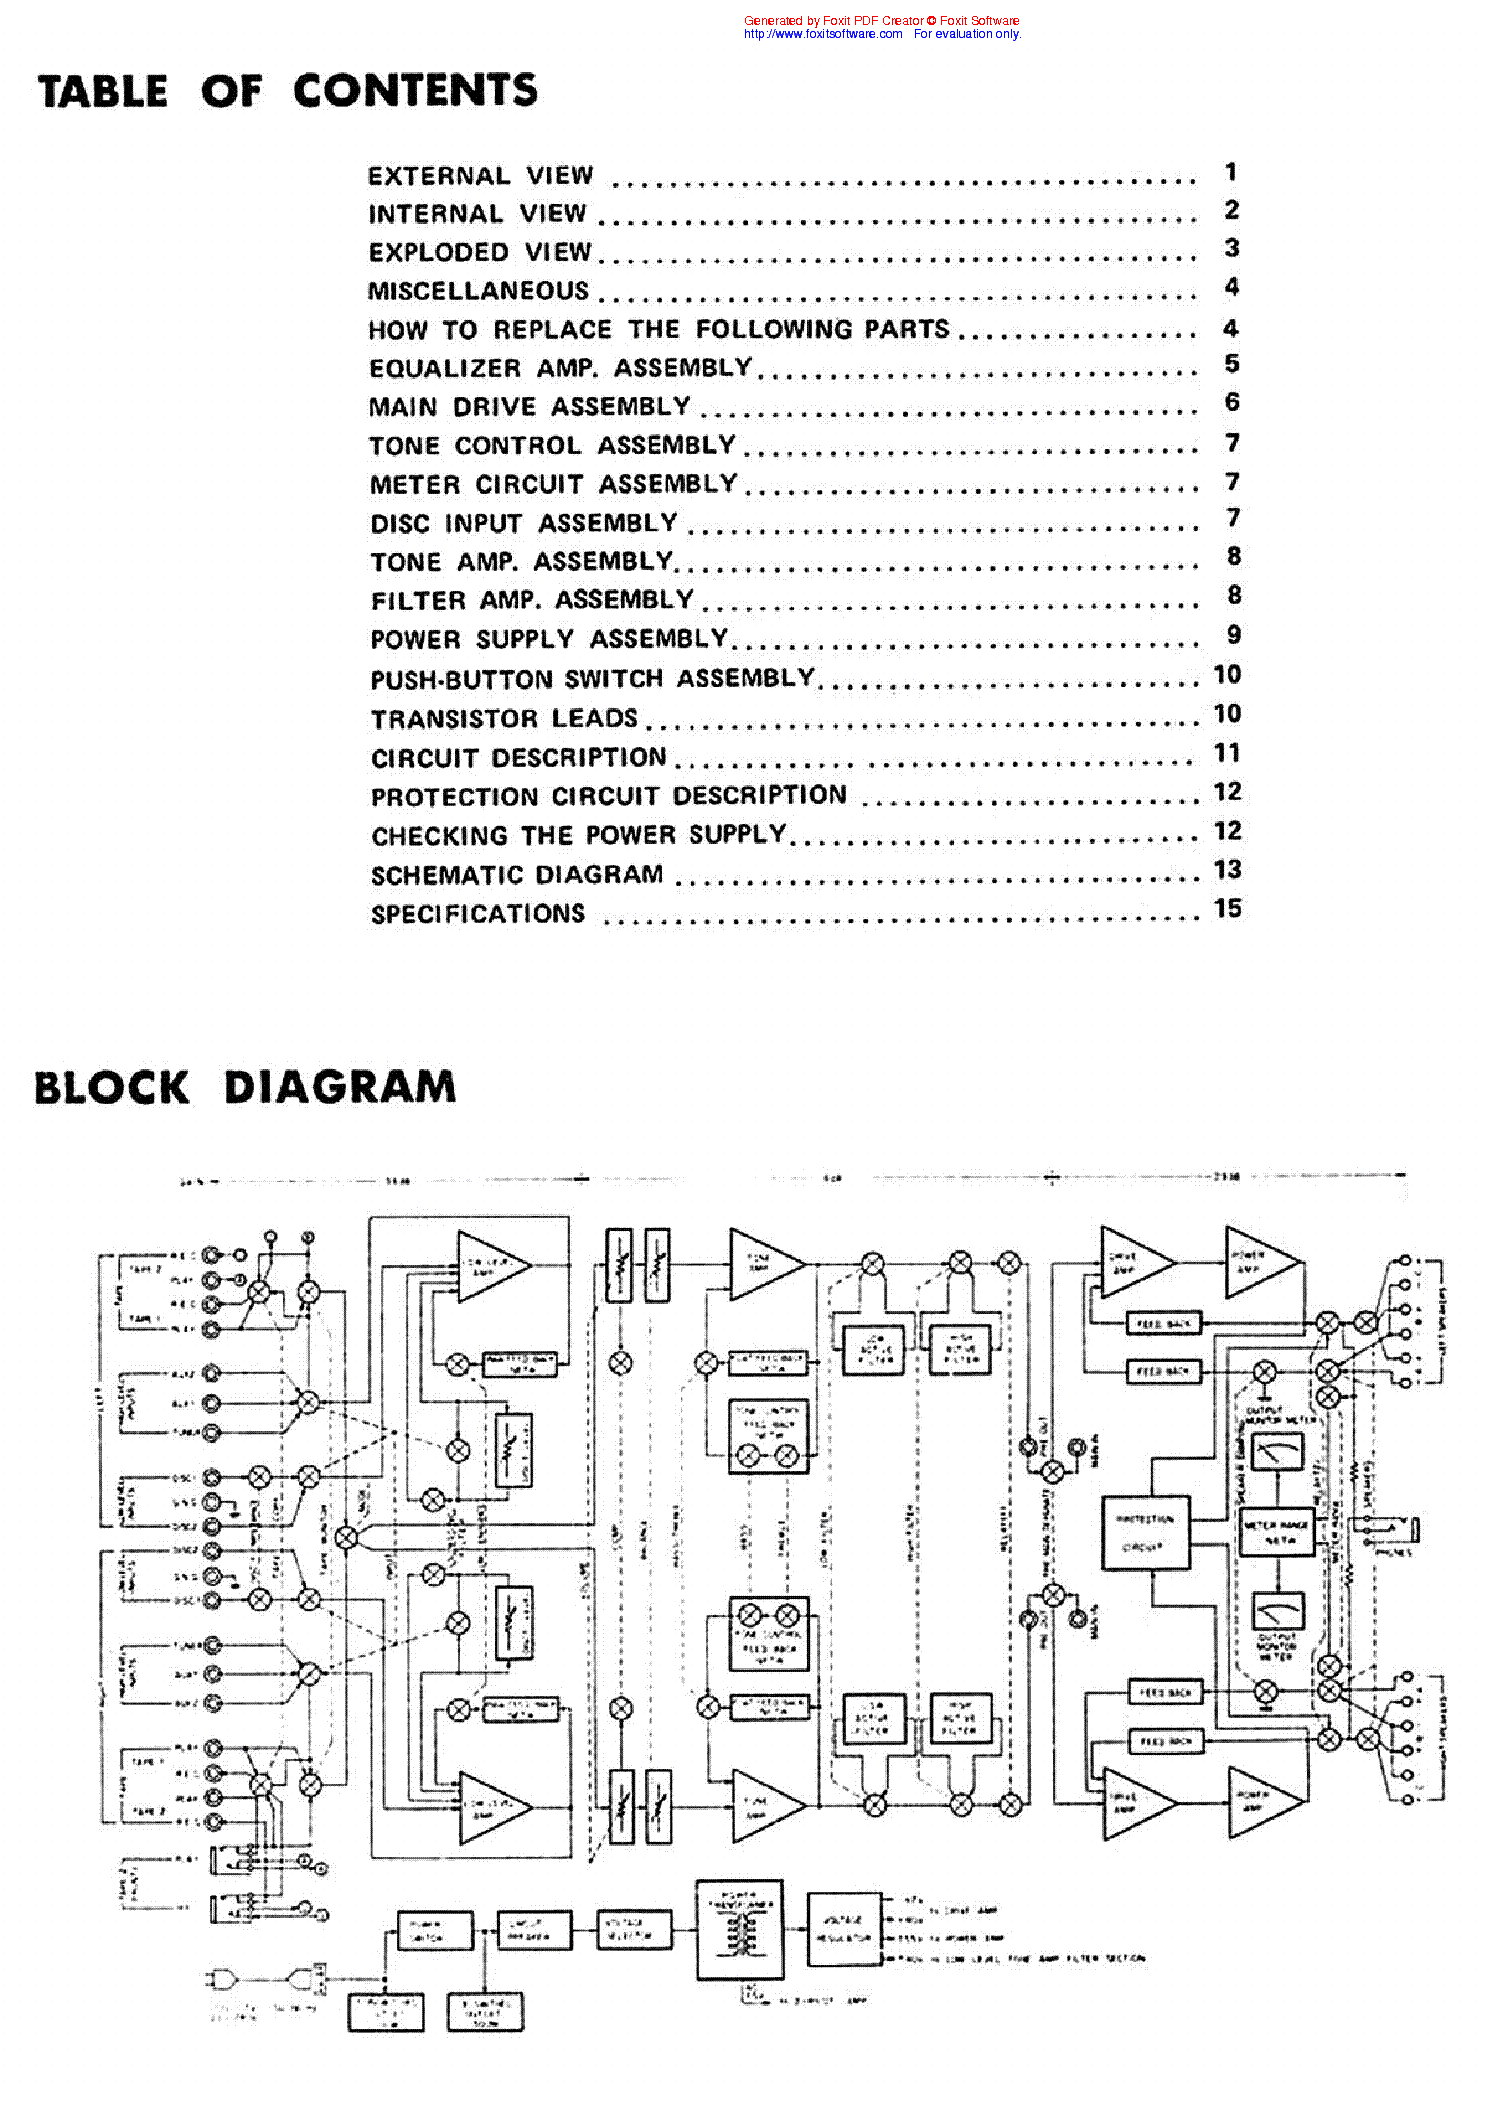 ACCUPHASE E-202 SM NO-SCH Service Manual download, schematics, eeprom